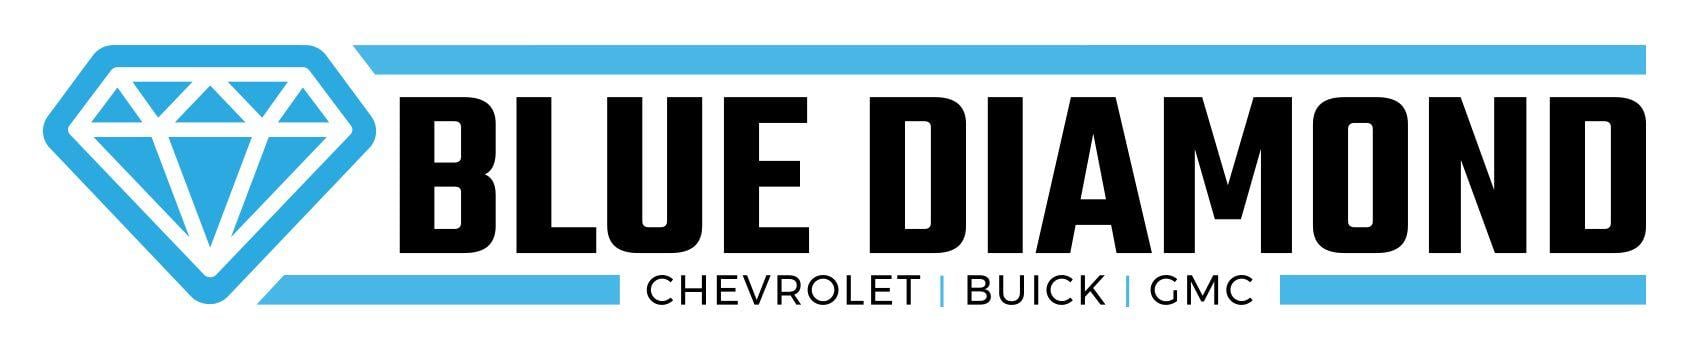 Diamond Chevrolet Logo - 1967 1500 at Blue Diamond Chevrolet Buick GMC , Price